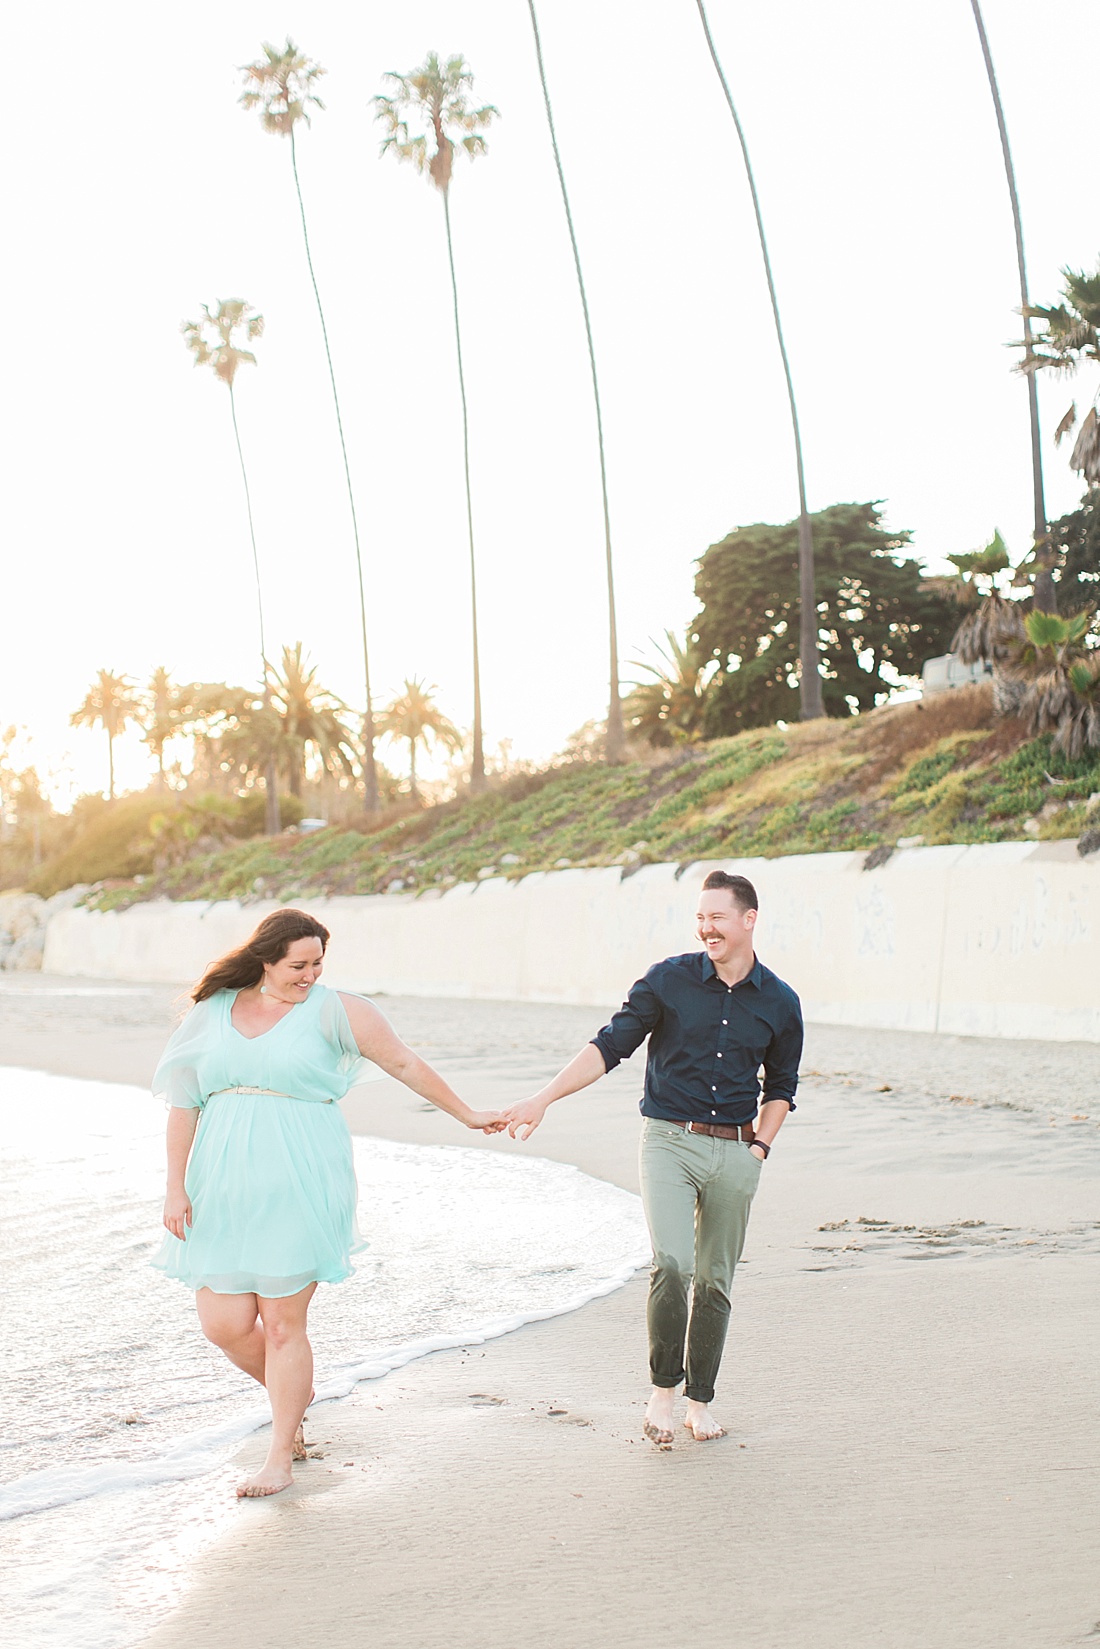 James & Jess | Santa Barbara anniversary photographer |portraits by Abby Grace